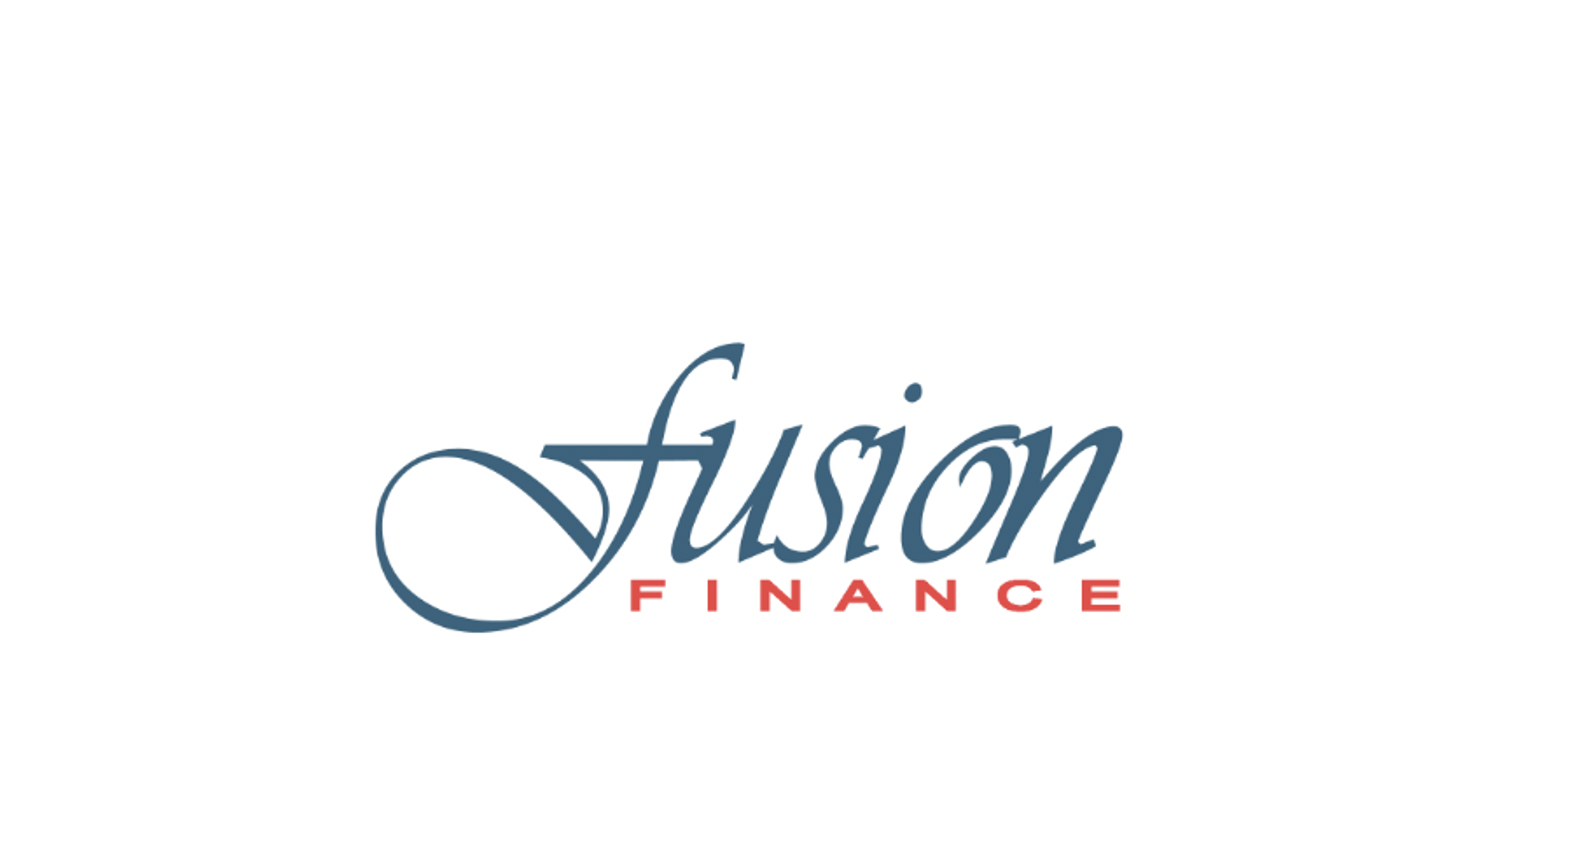 Fusion Finance